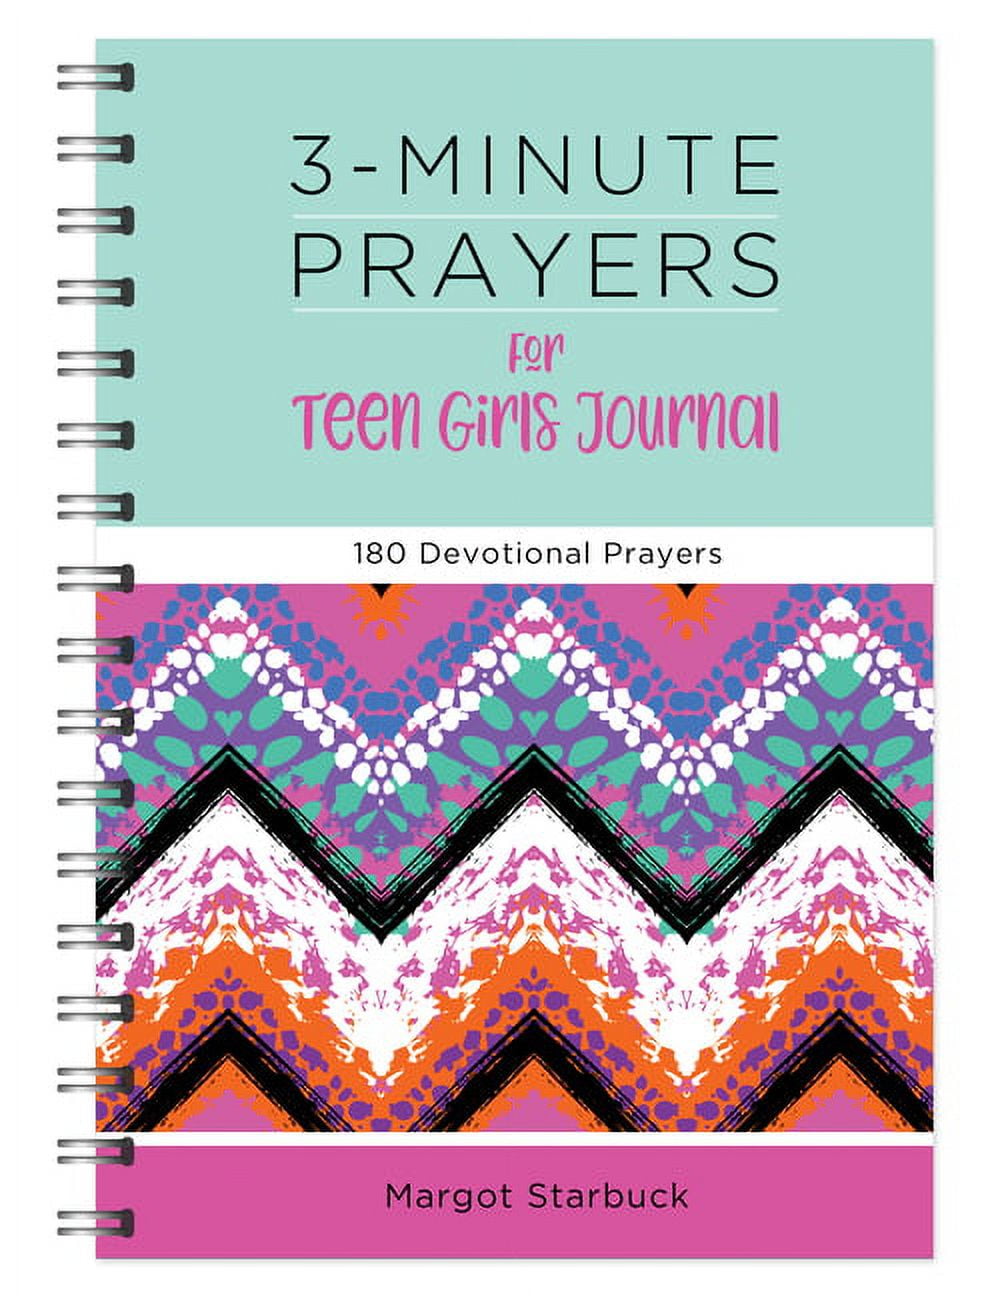 Unique: a Creative Devotional Journal for Teen Girls [Book]